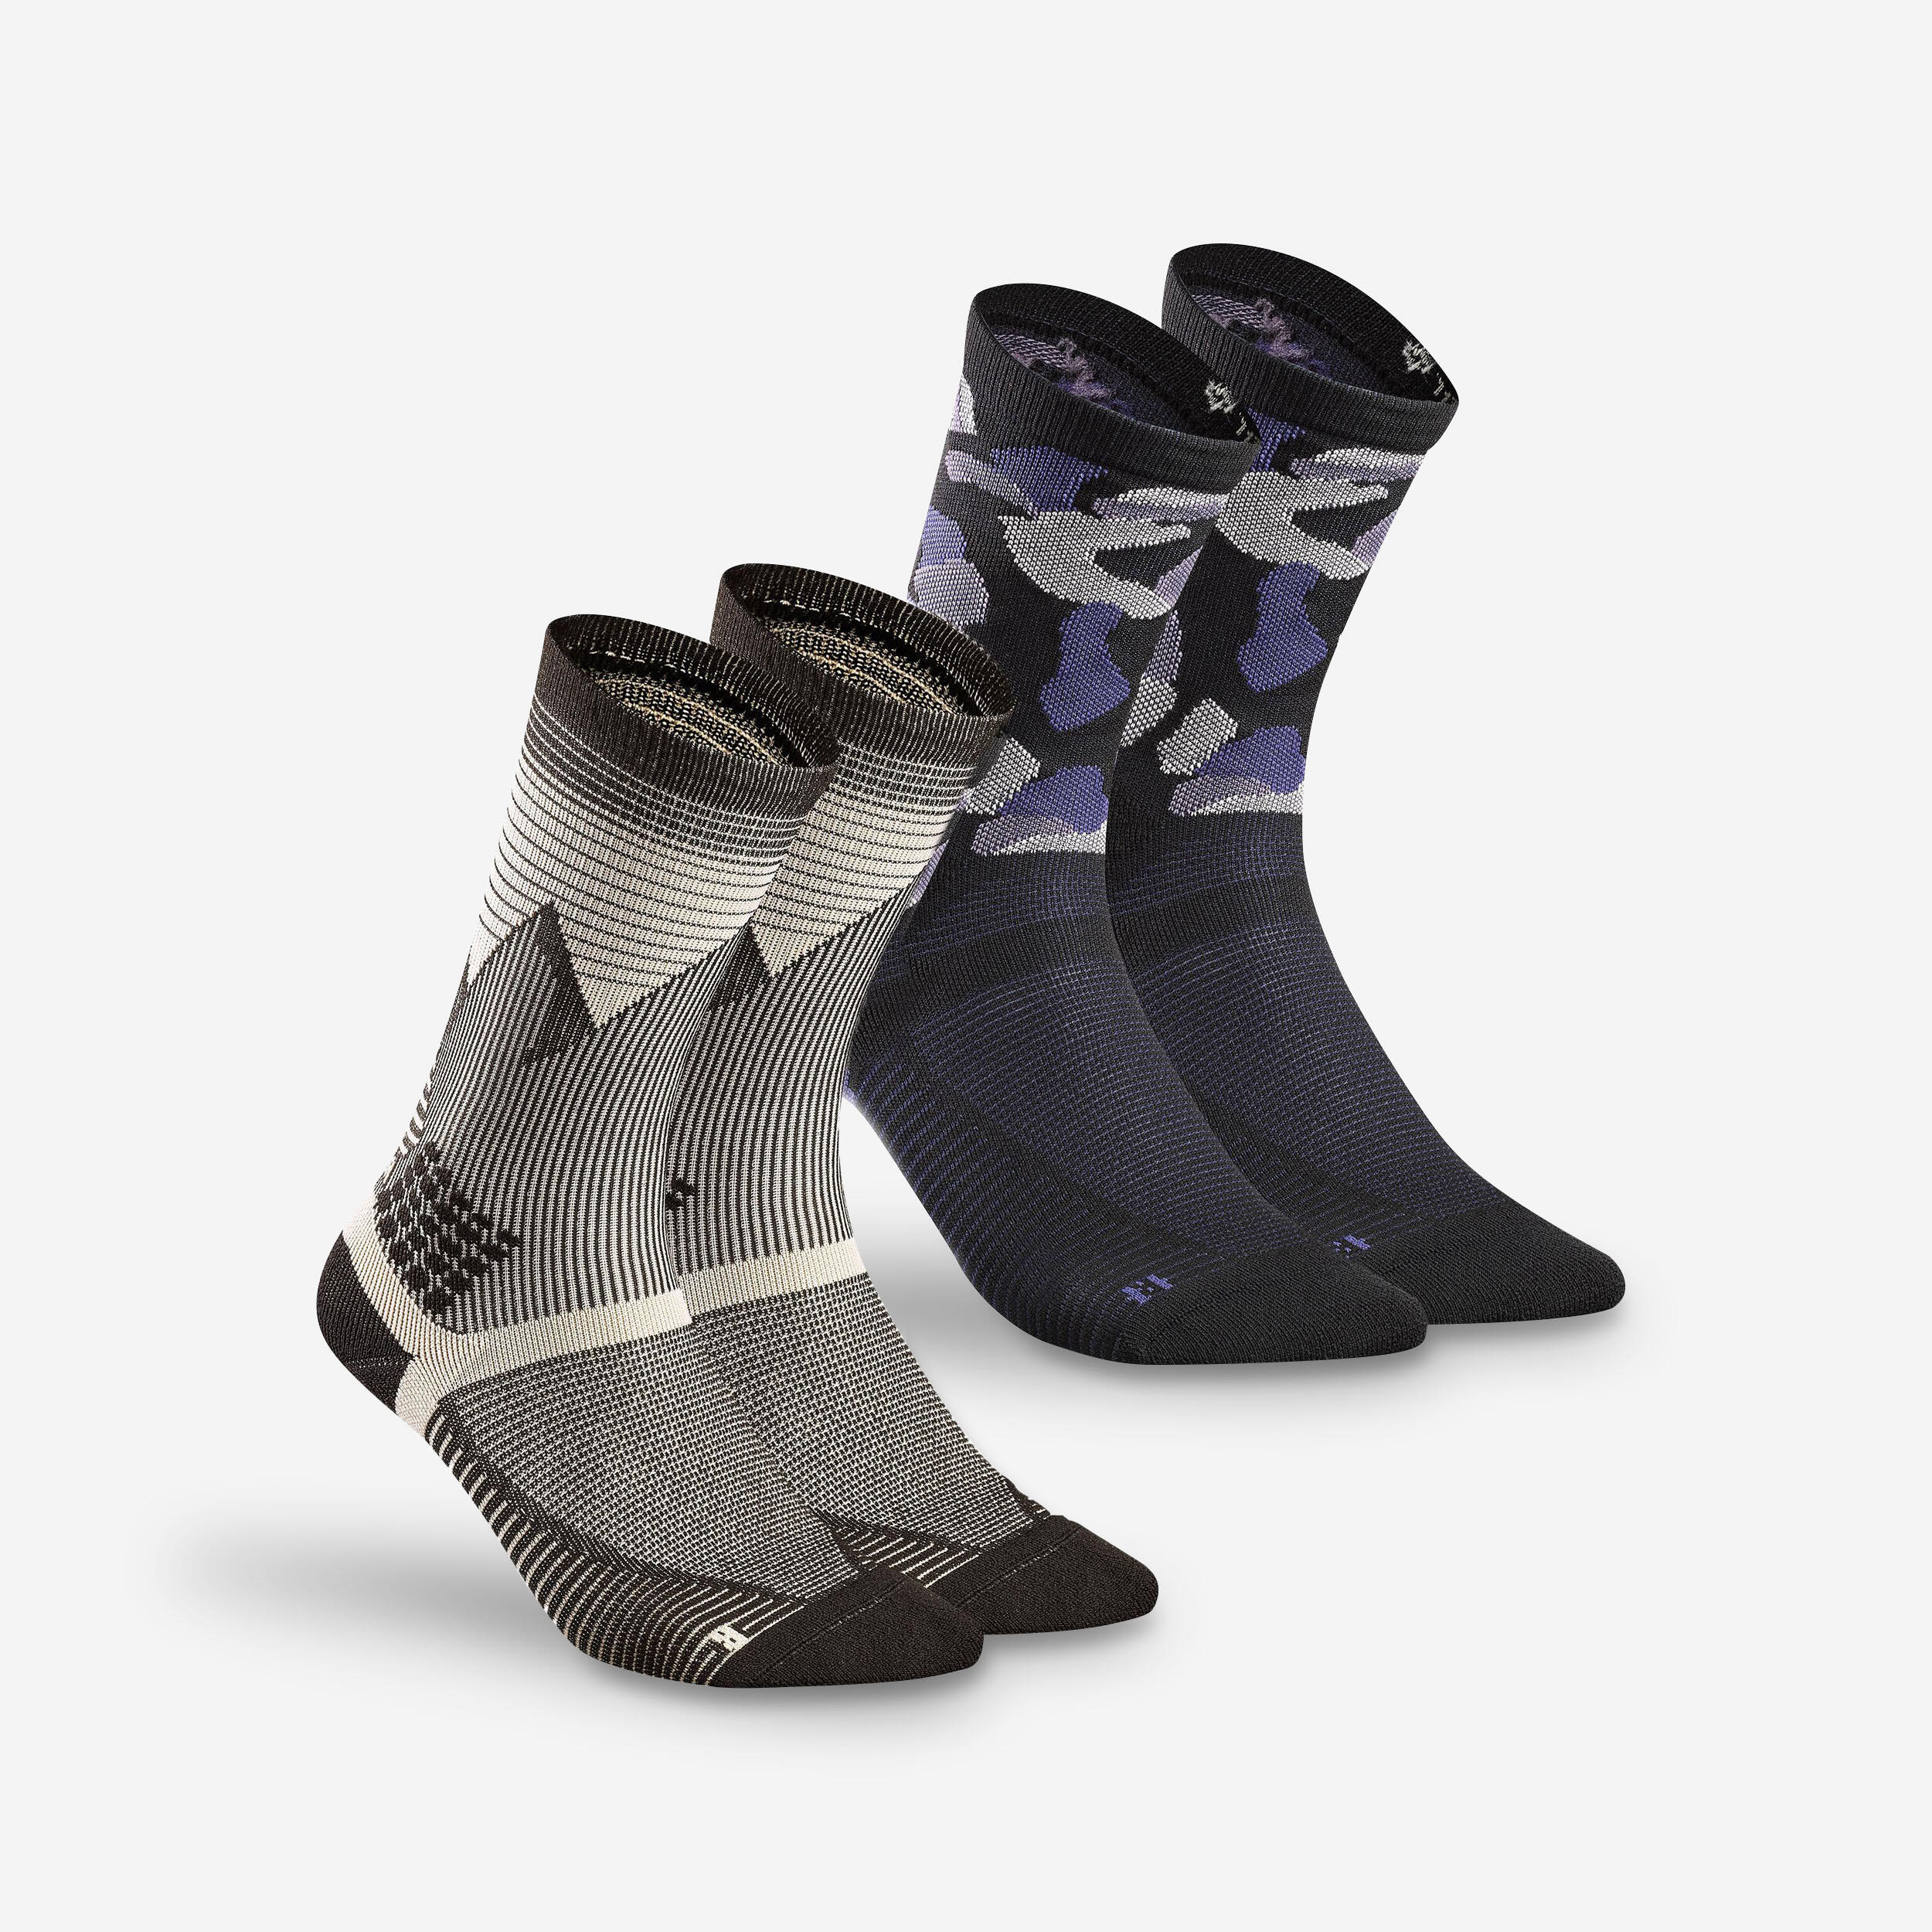 QUECHUA Hiking socks - Hike 500 High Trendy Kamo x2 pairs